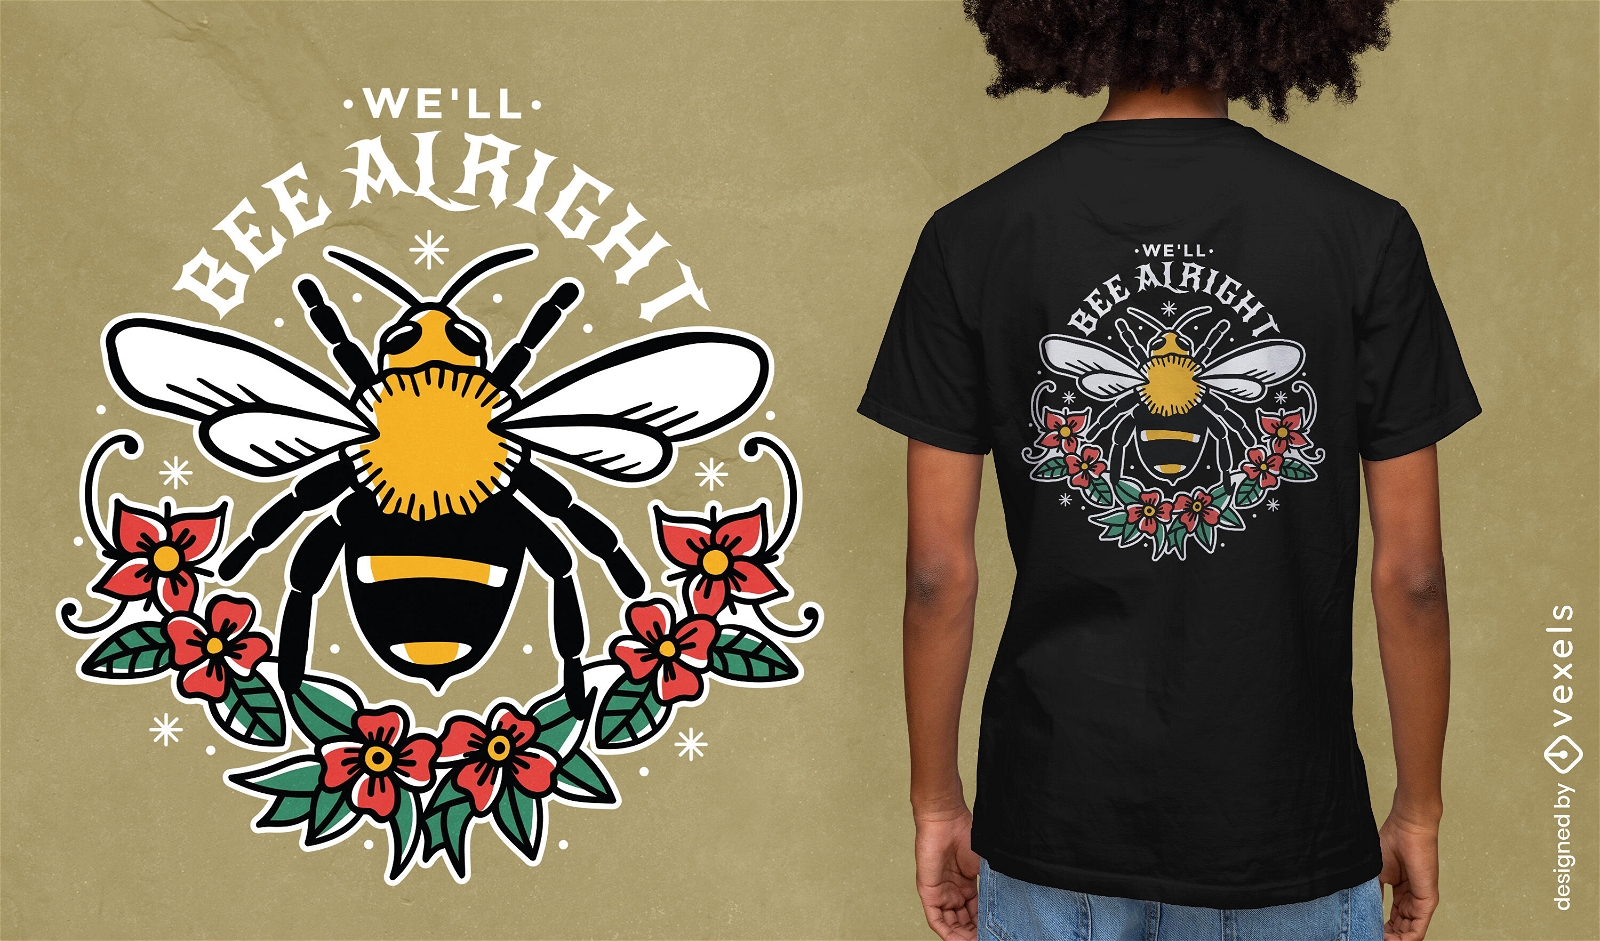 We'll bee alright tattoo t-shirt design